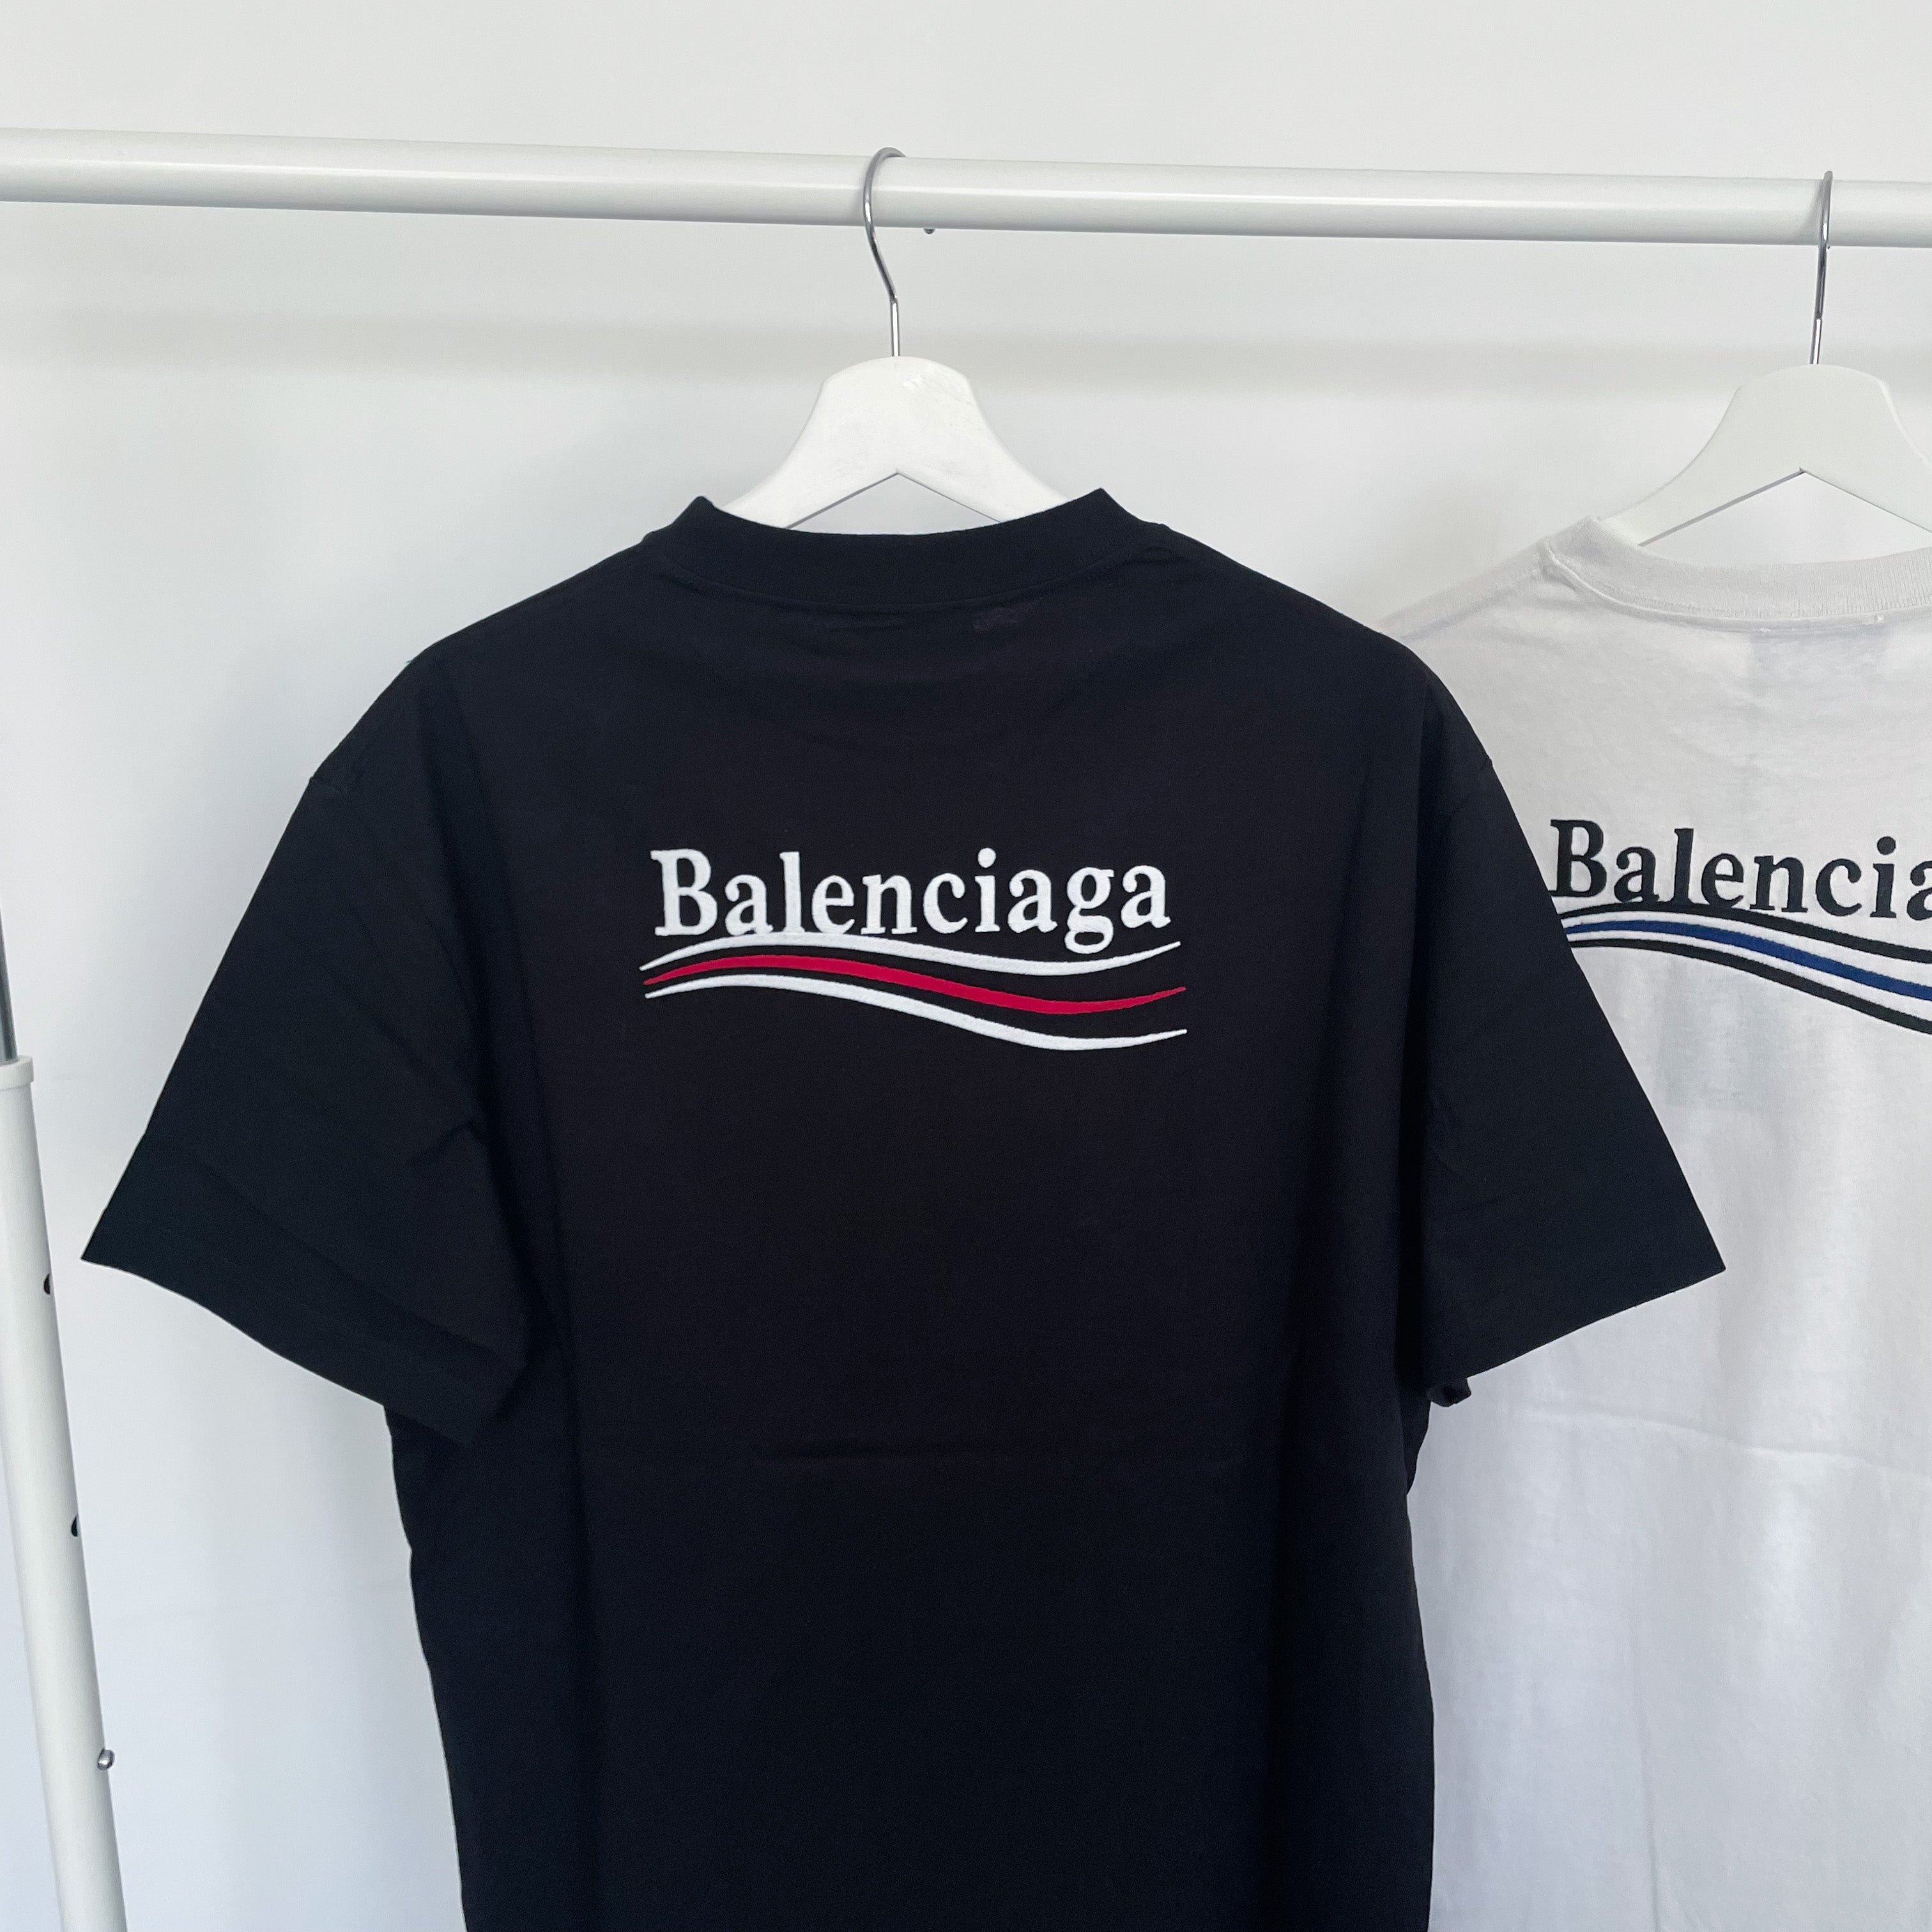 Balenciaga Embroidered Campaign Tee - Black